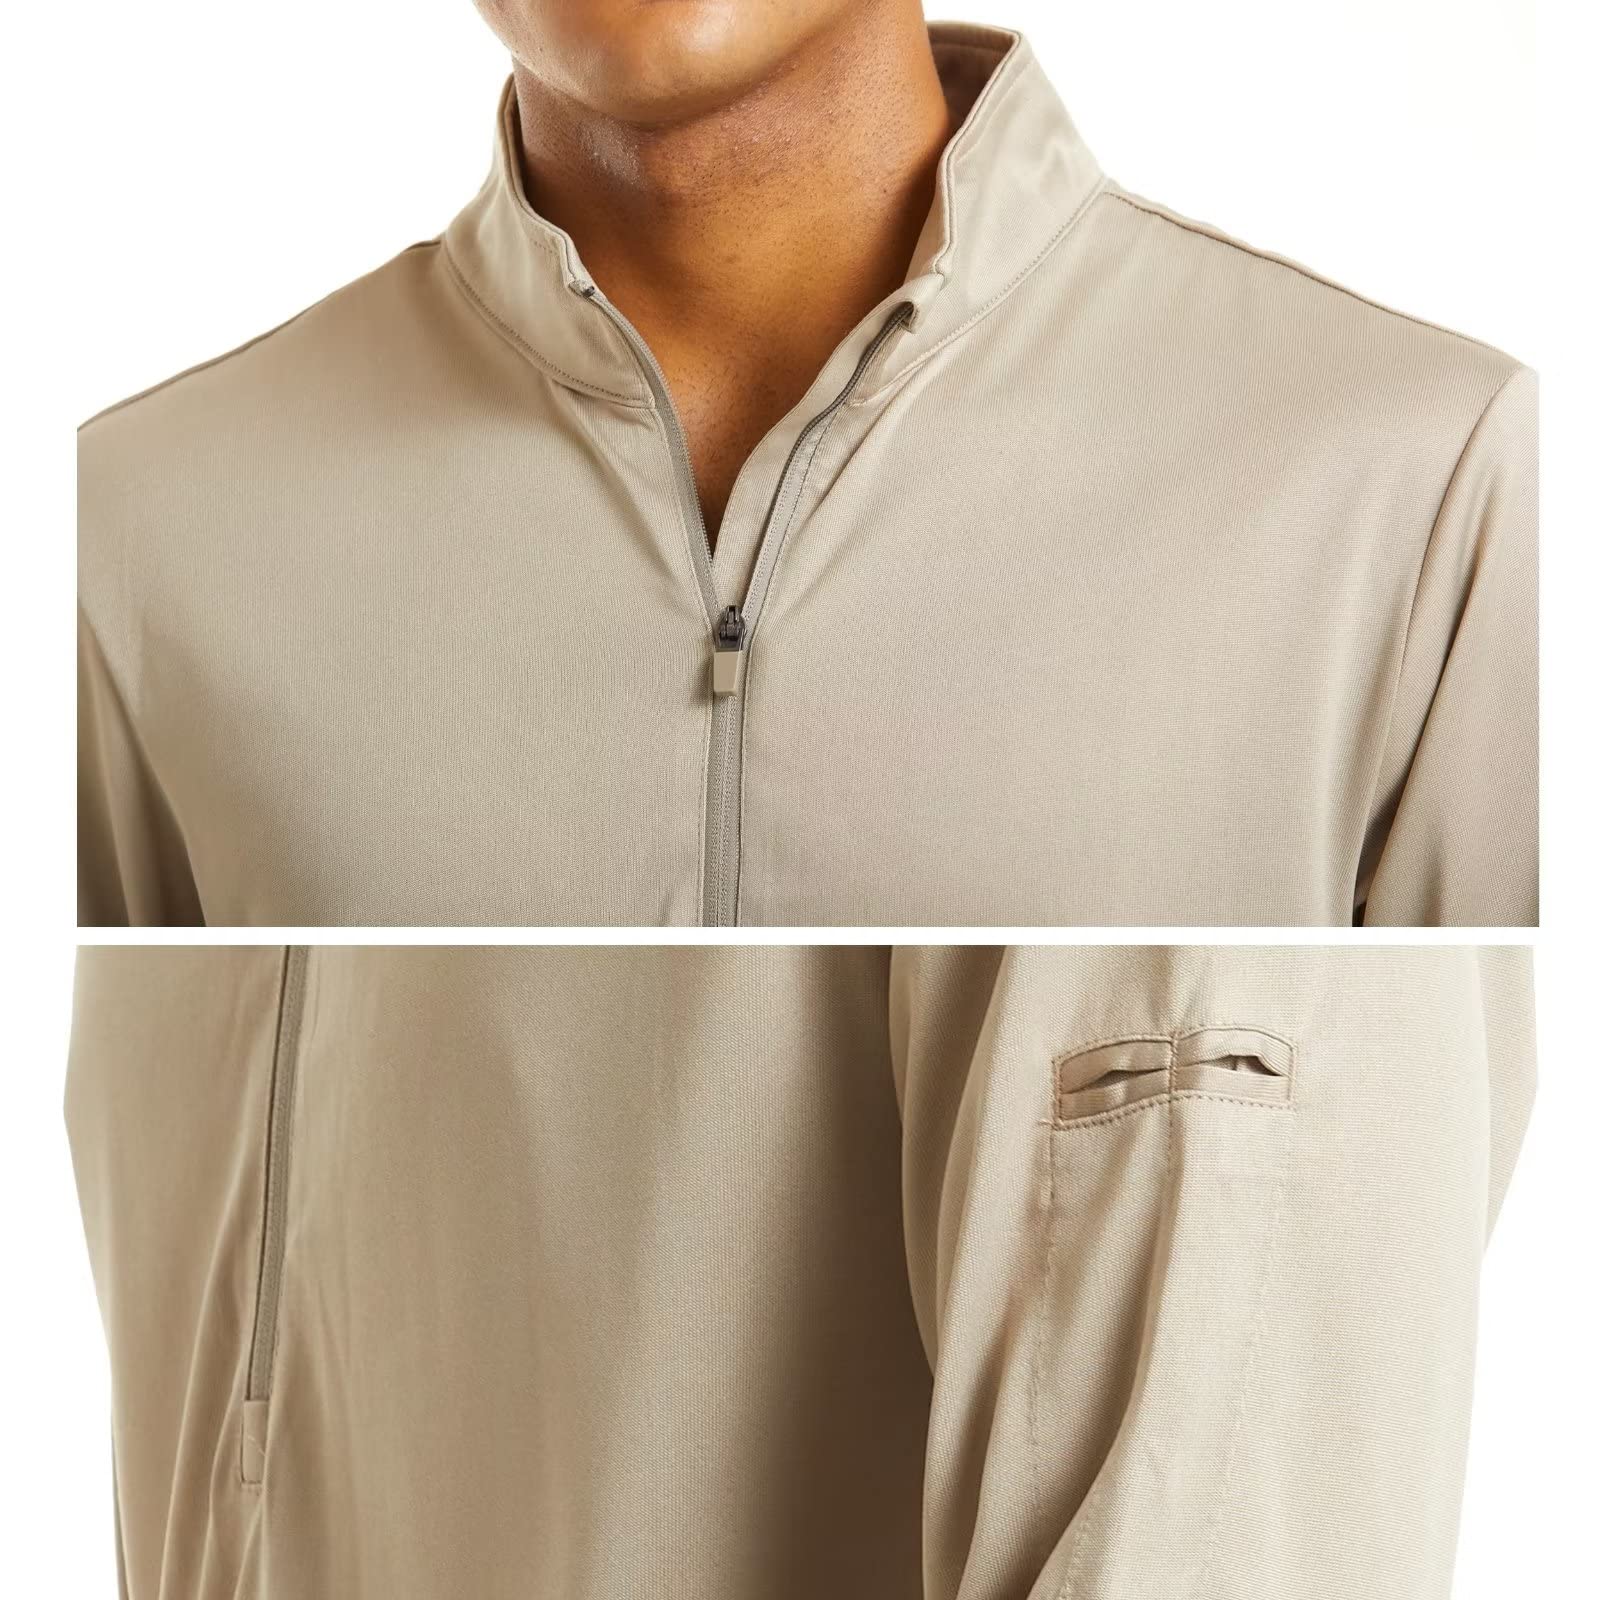 MAGCOMSEN Men's Long Sleeve Active Zipper Shirts Quick Dry Half-Zip Pullovers Tactical Shirt Athletic Shirts for Men Running Shirts Gym Shirts Black